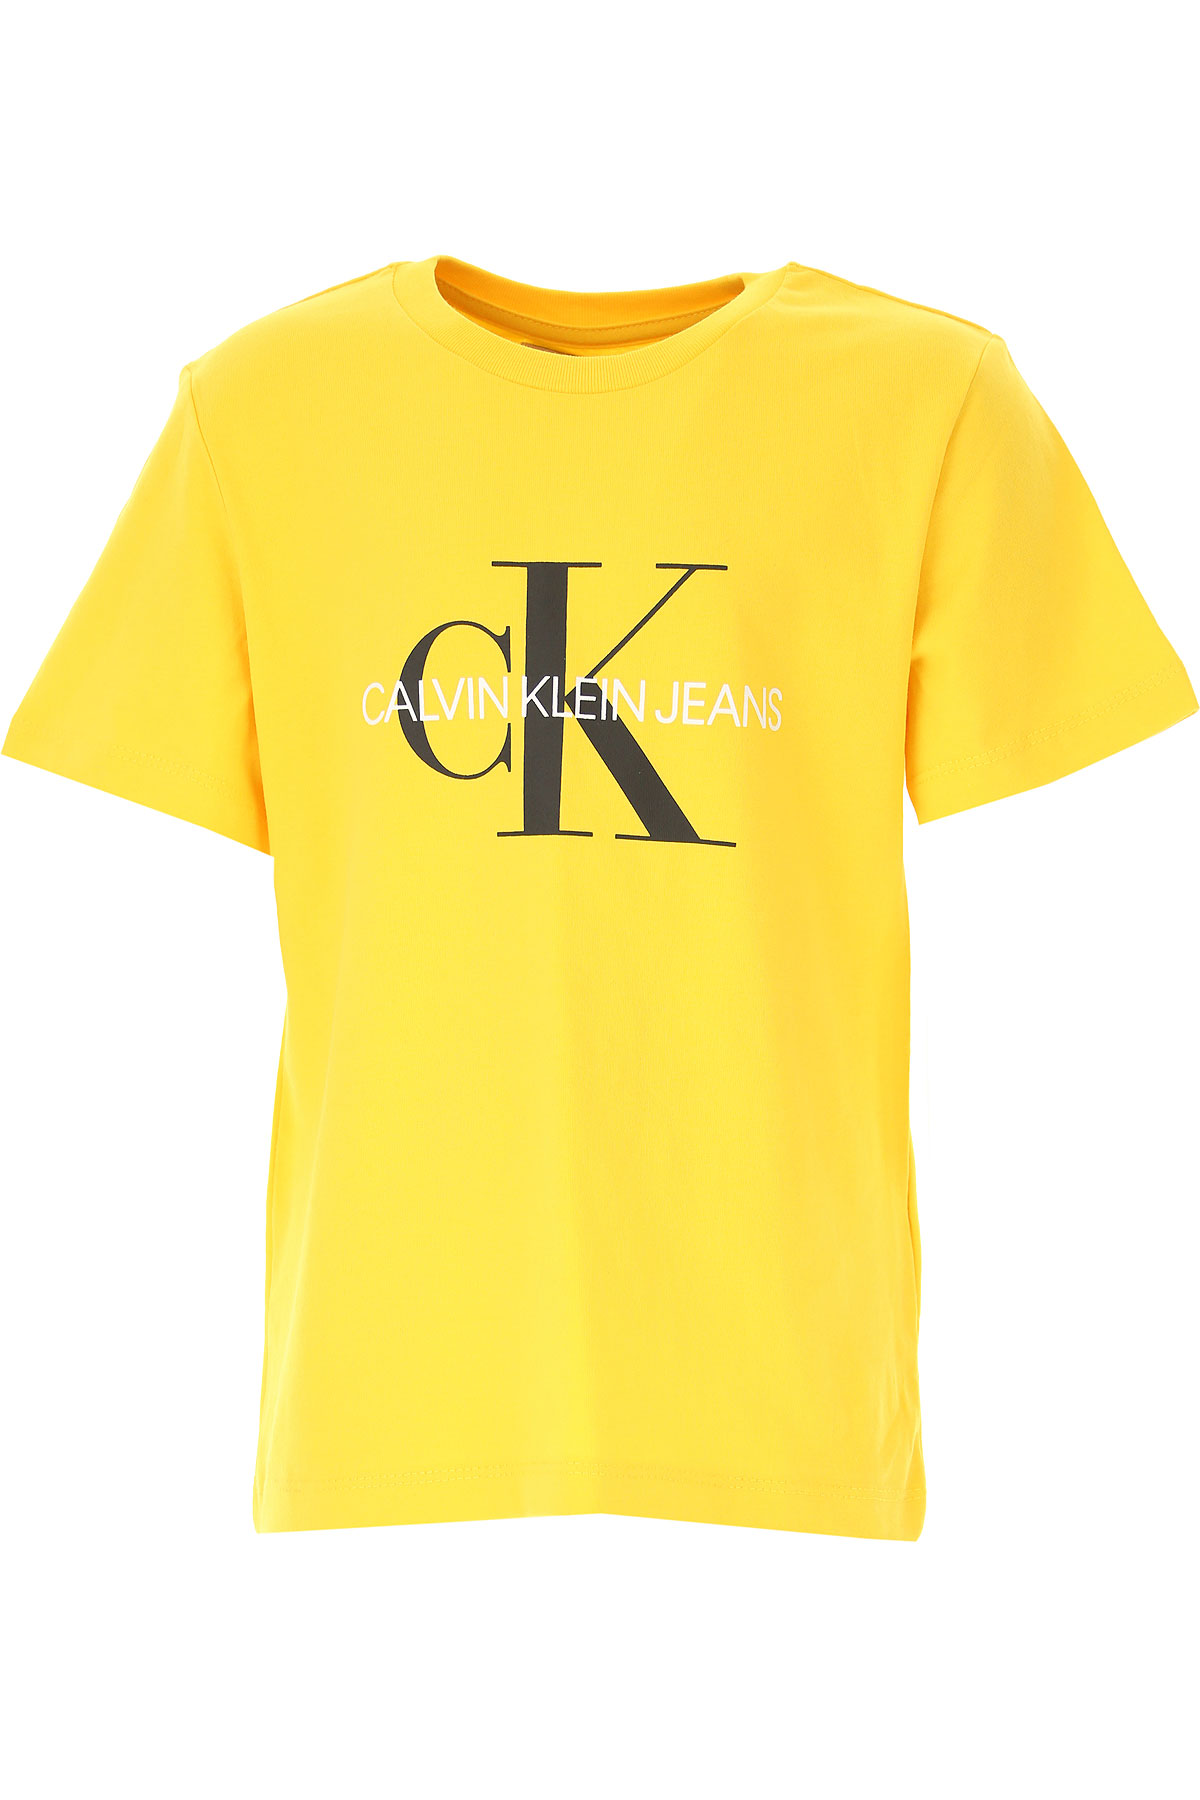 Calvin Klein Kinder T-Shirt für Jungen Günstig im Sale, Gelb, Baumwolle, 2017, 10Y 12Y 14Y 16Y 4Y 6Y 8Y